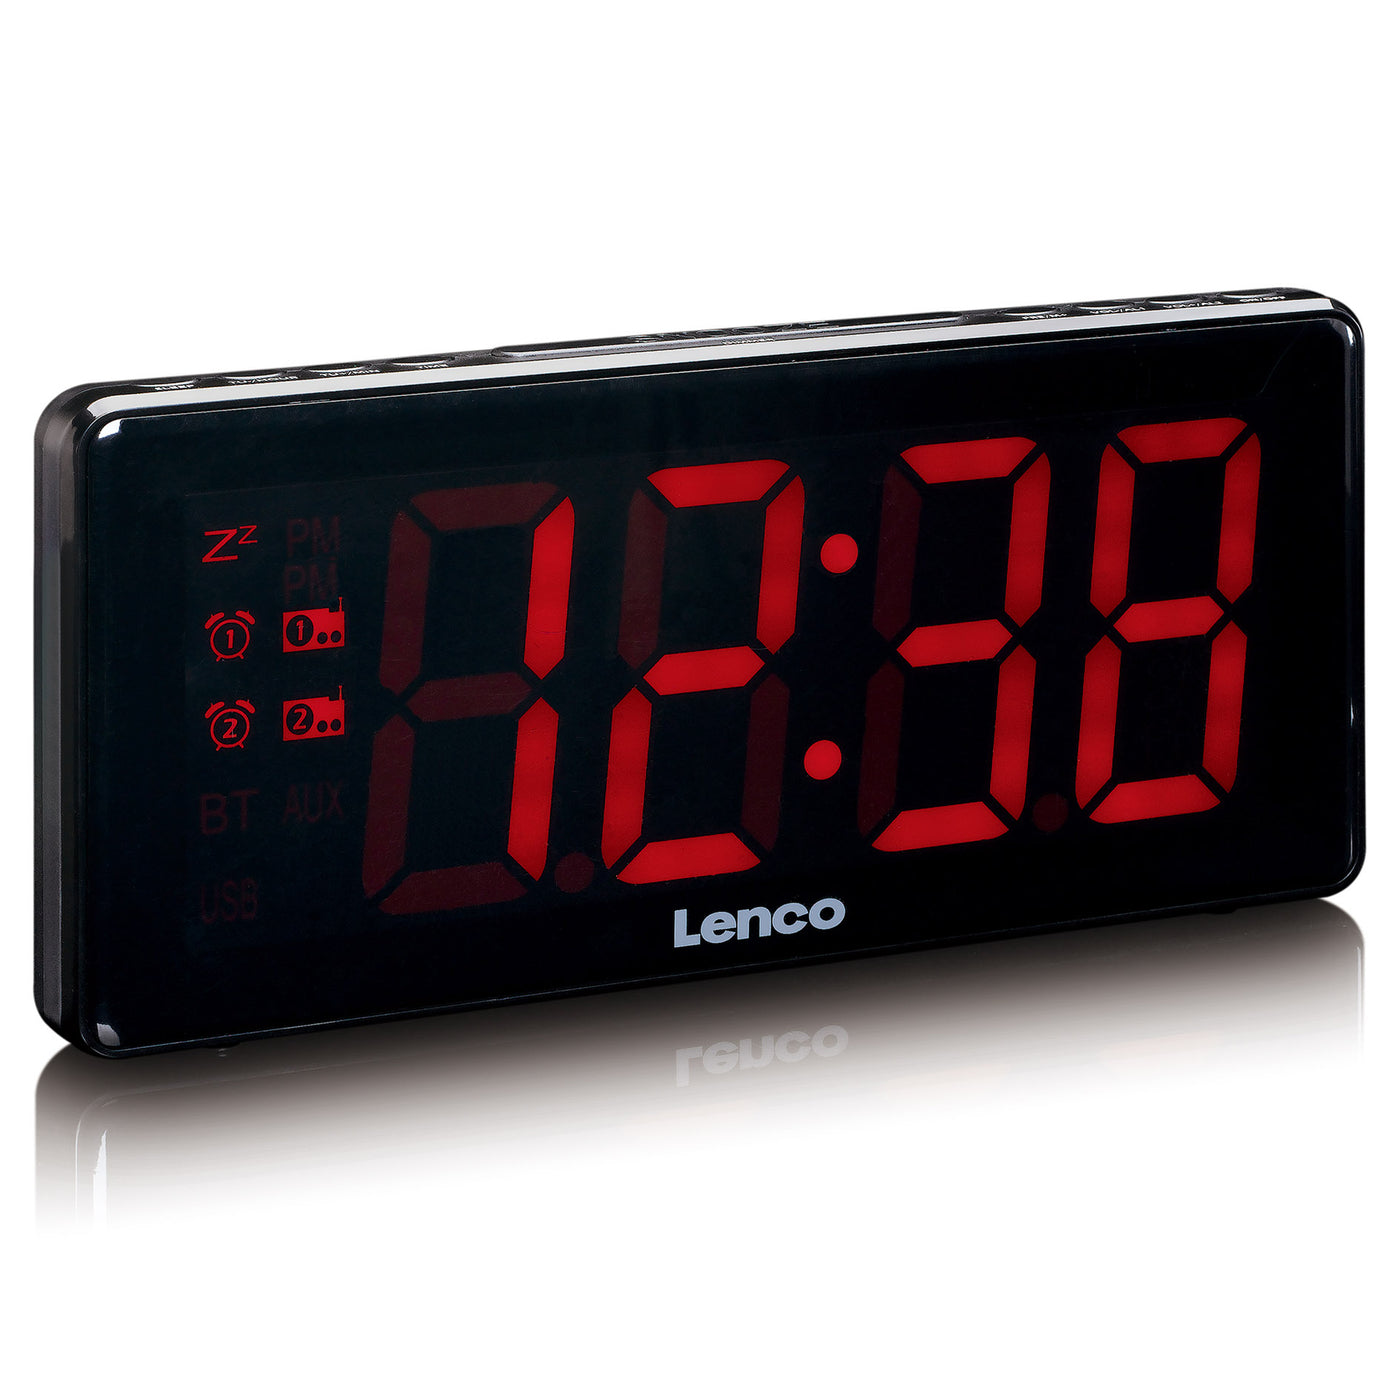 LENCO CR-30BK - Clockradio with red 3 inch display